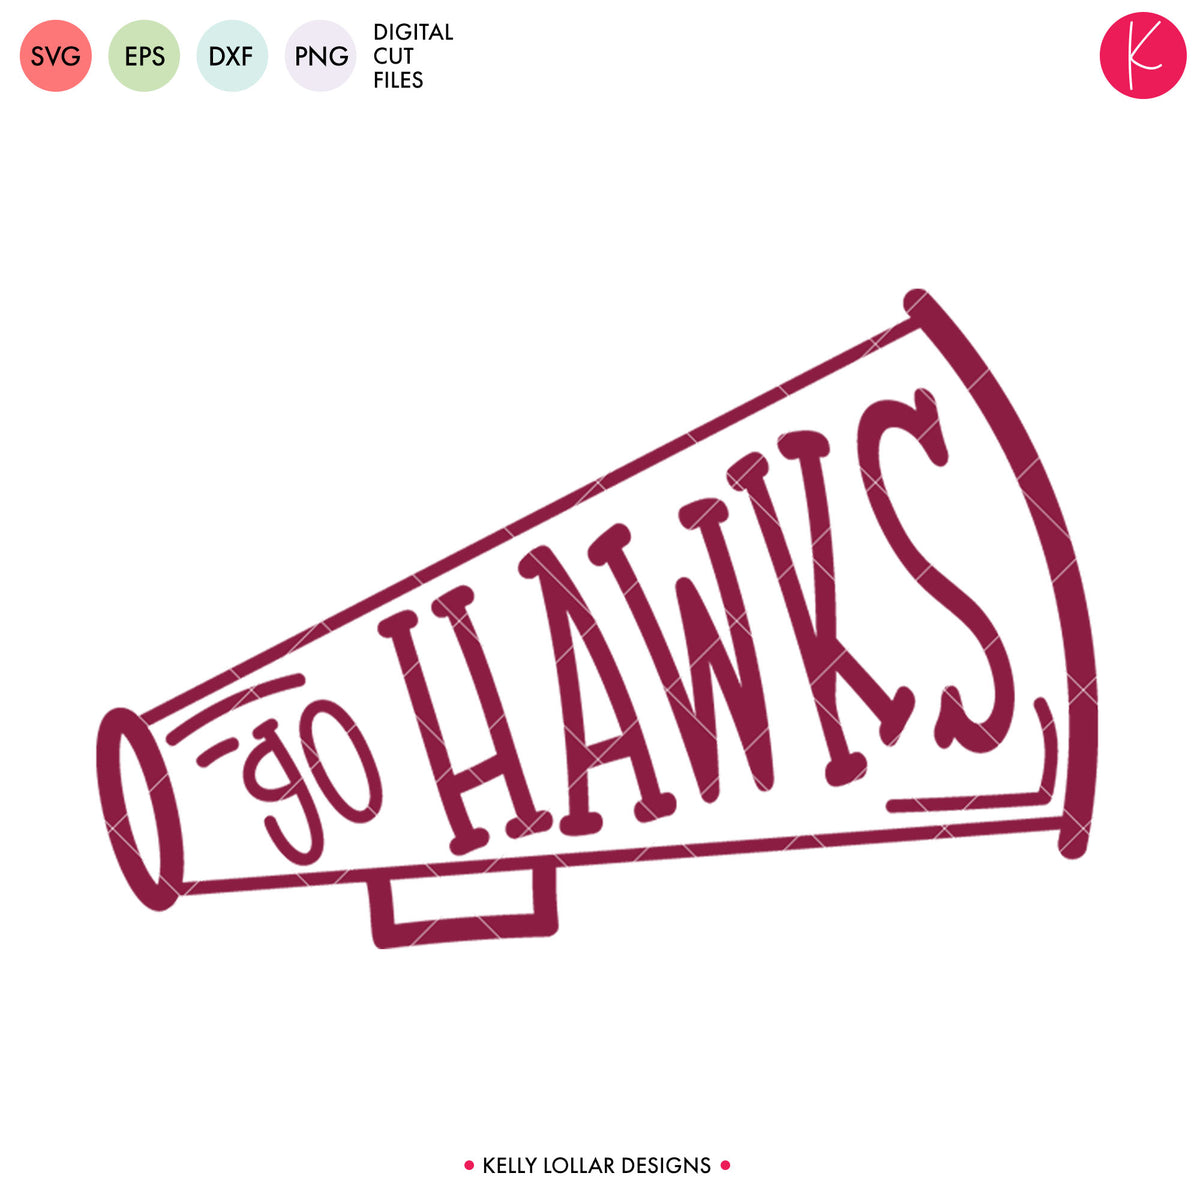 Hawks Cheer Bundle | SVG DXF EPS PNG Cut Files